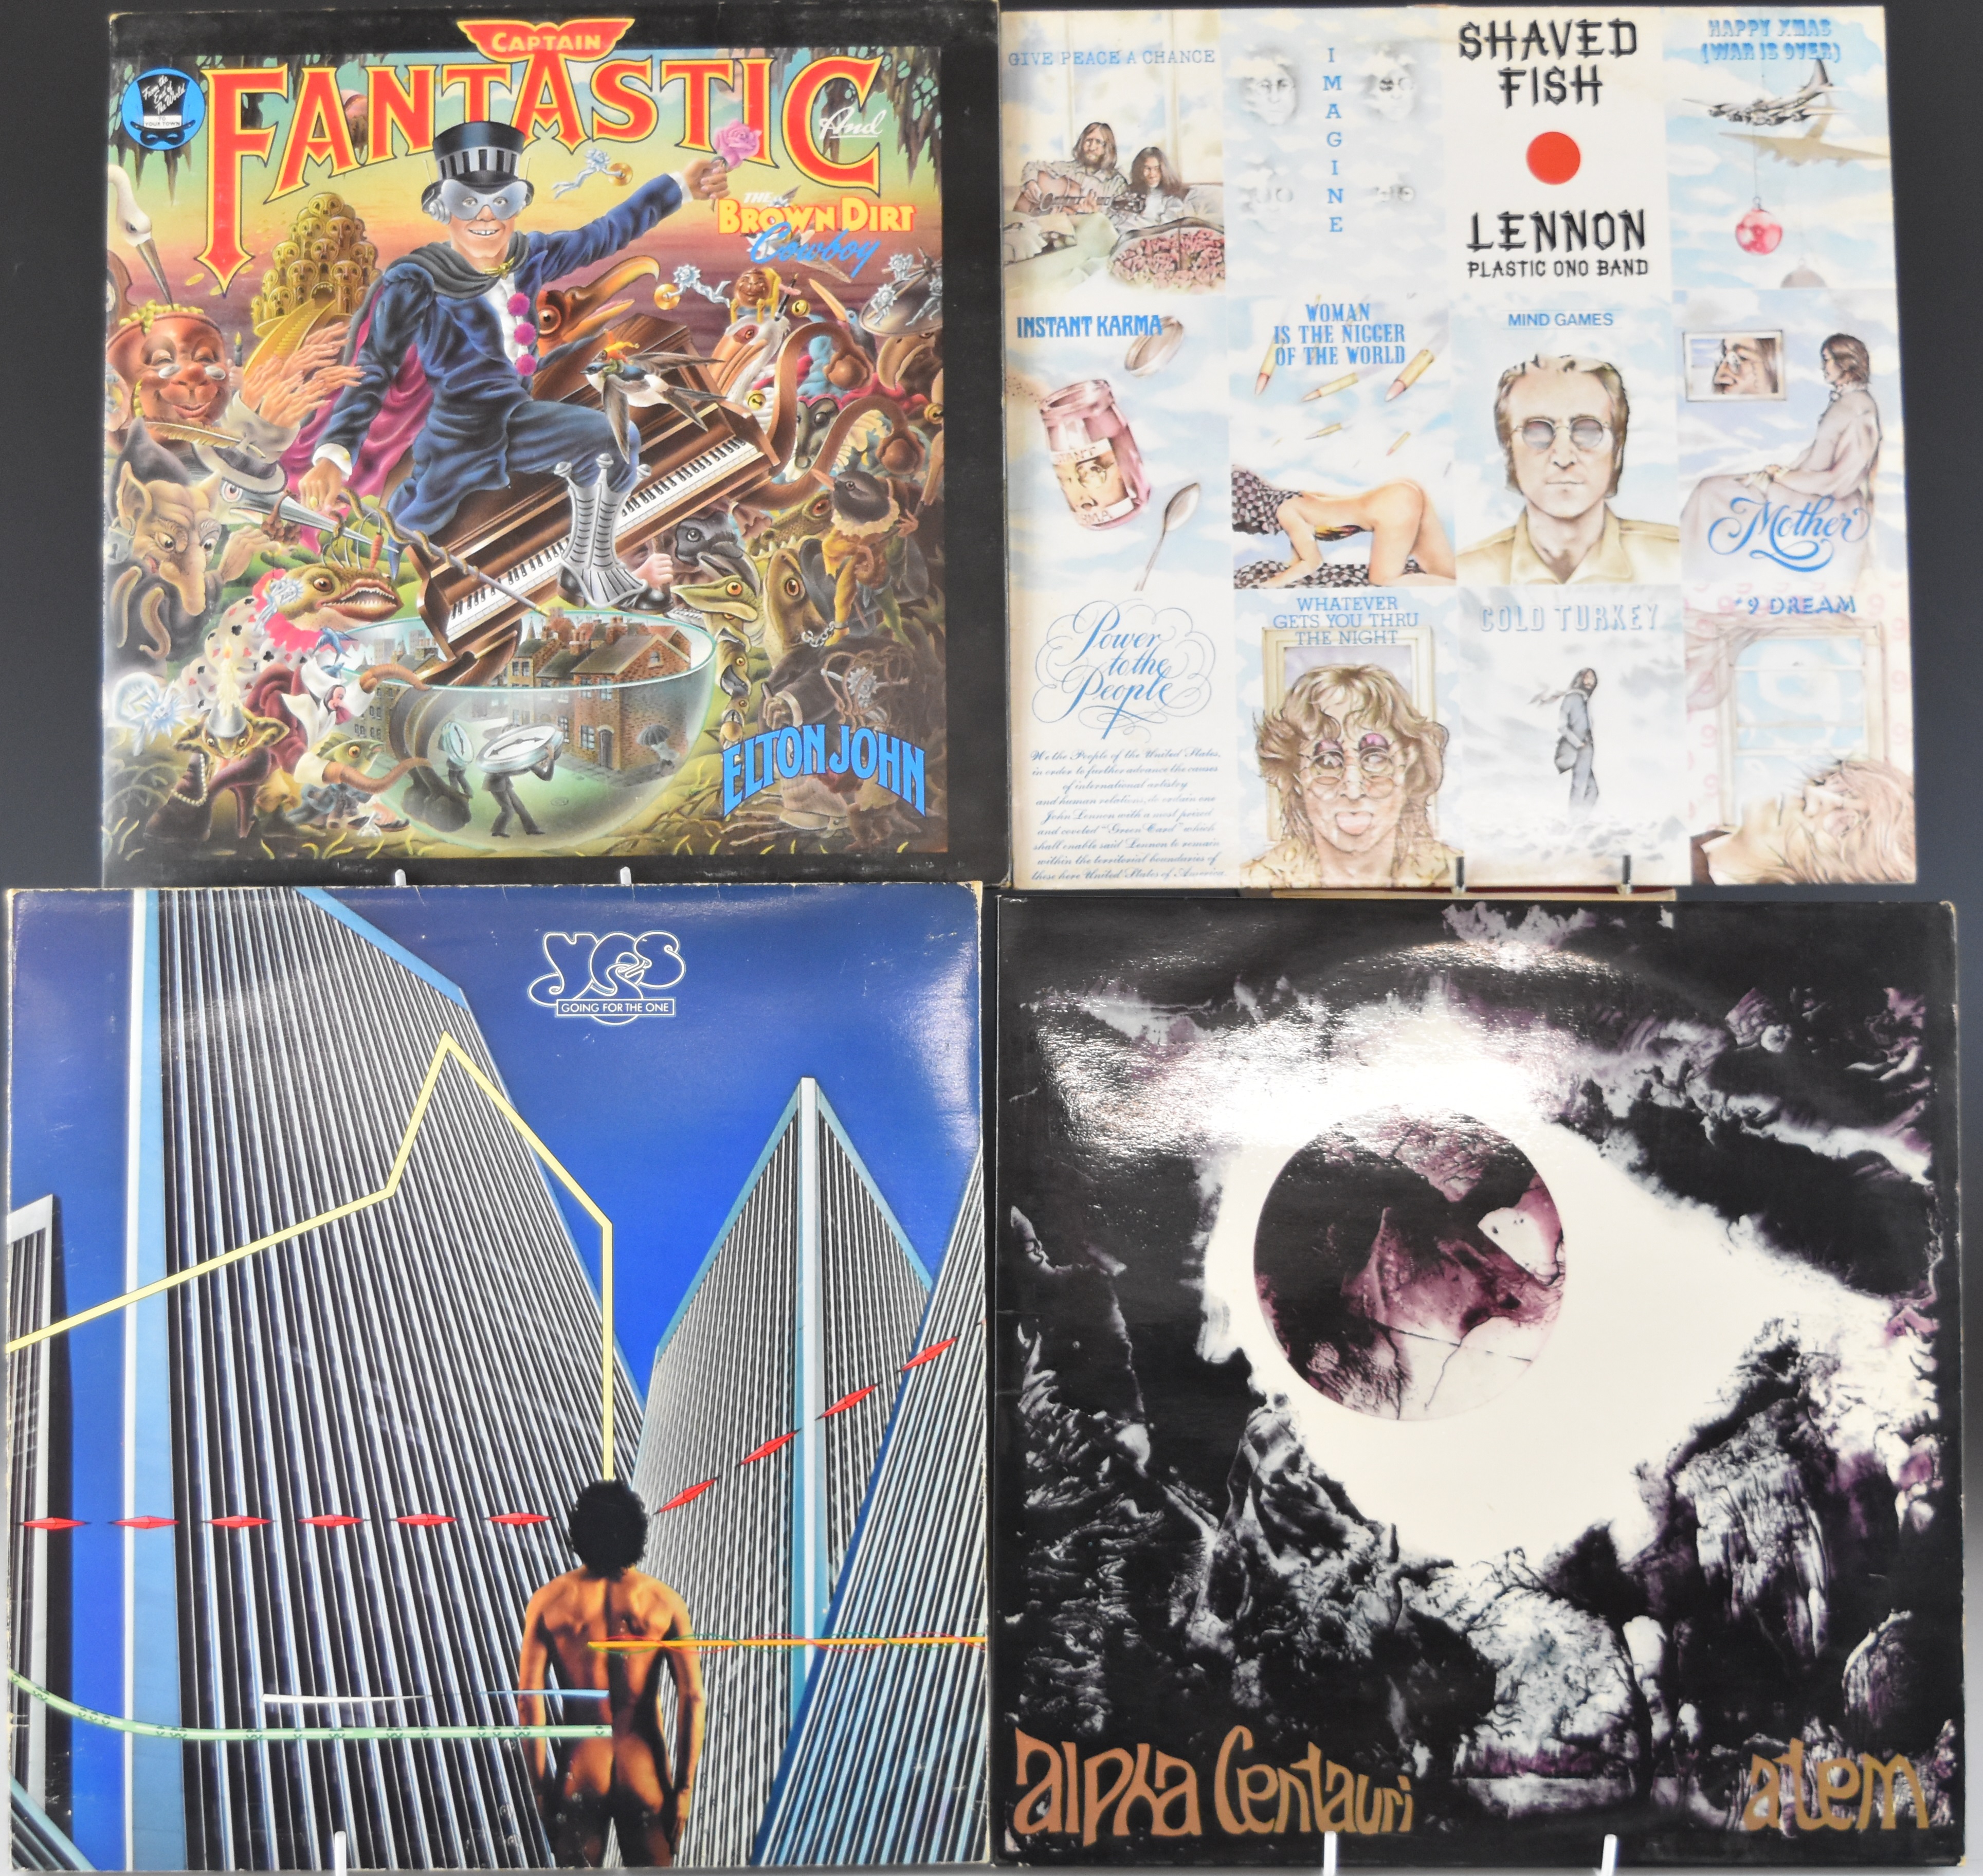 Twenty Rock, Prog Rock and Heavy Rock albums including Rainbow Rising, Elton John, The Beatles, - Image 2 of 6